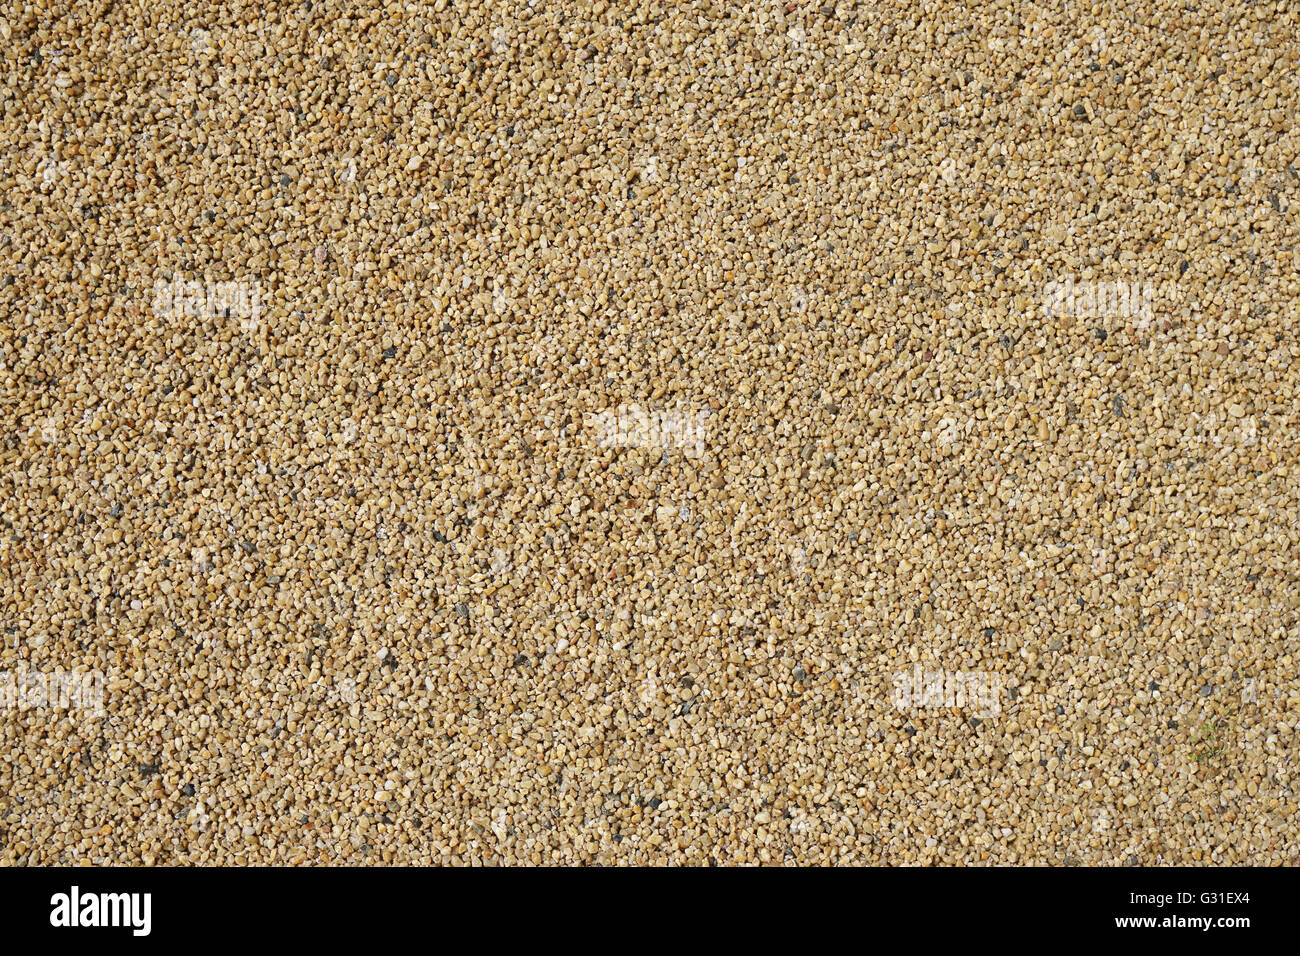 fine gravel background Stock Photo